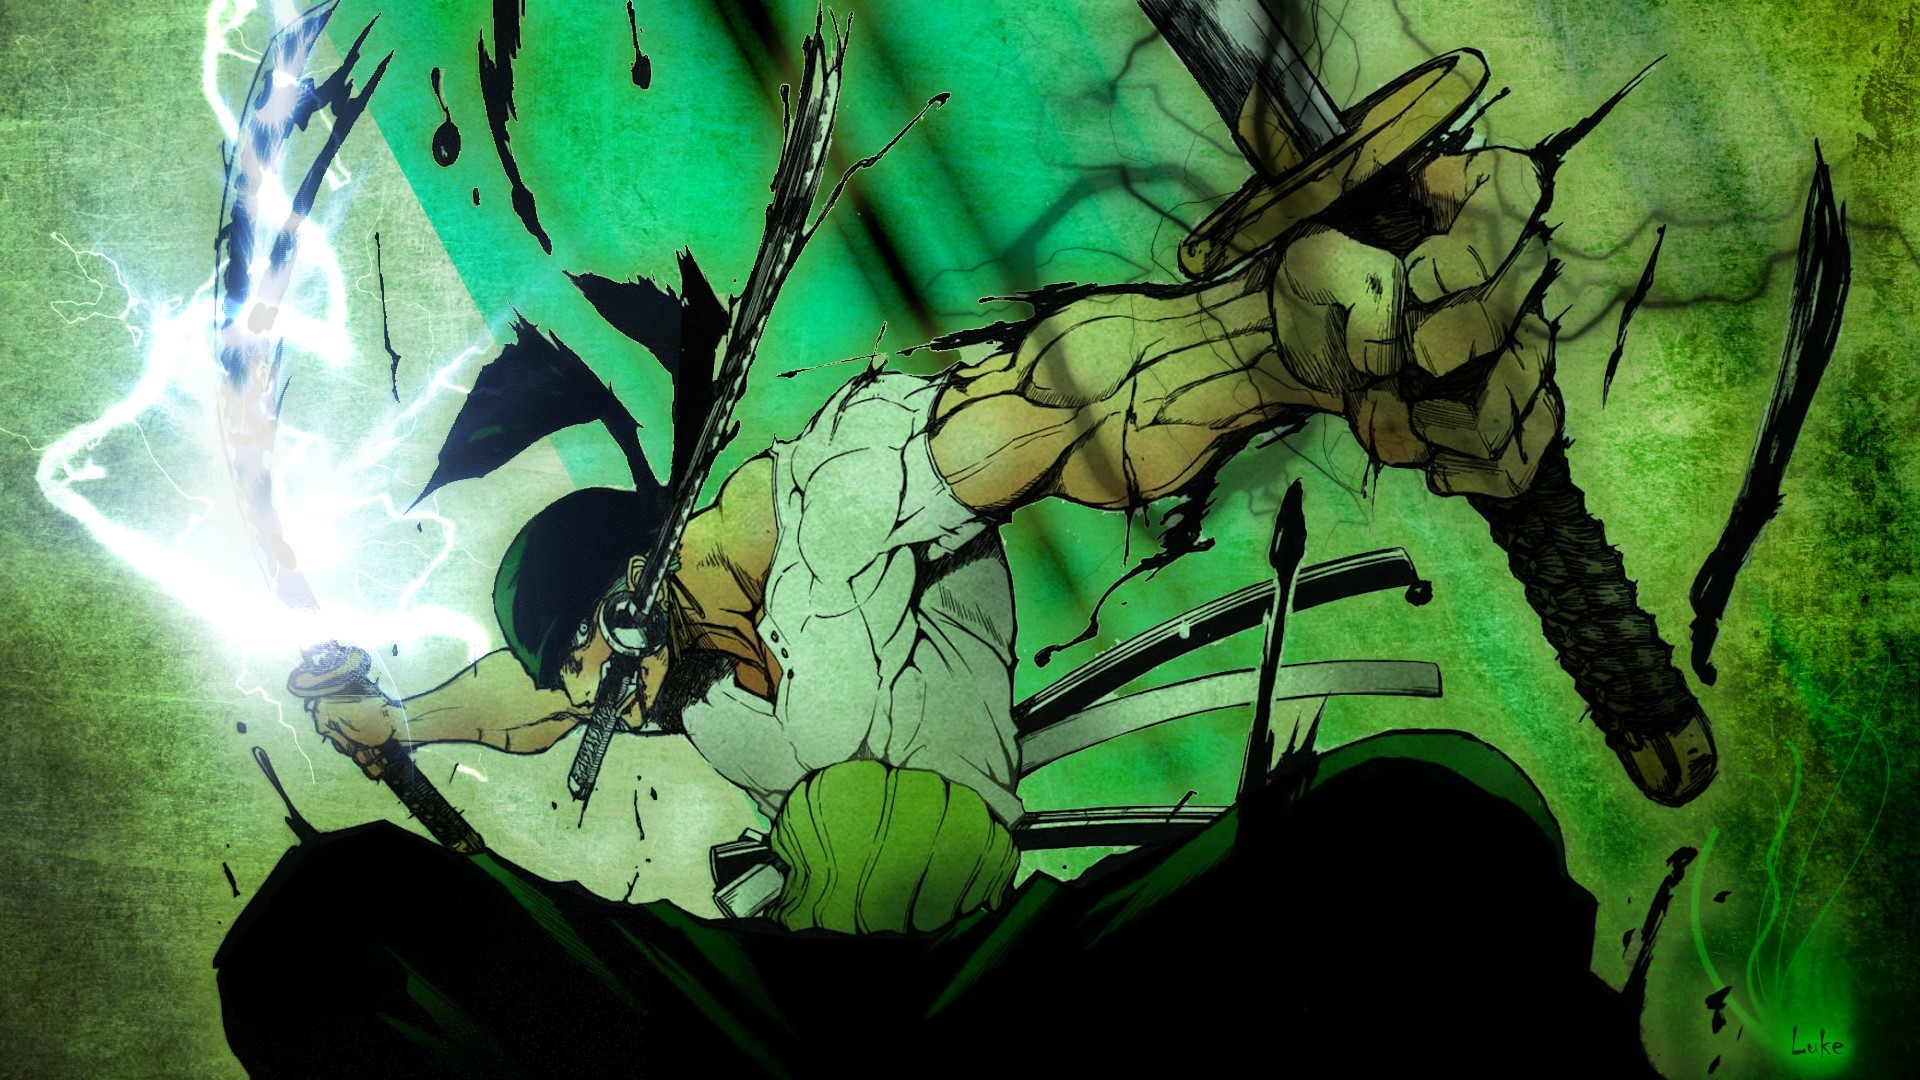 Roronoa Zoro - One Piece wallpaper - Anime wallpapers - #14072